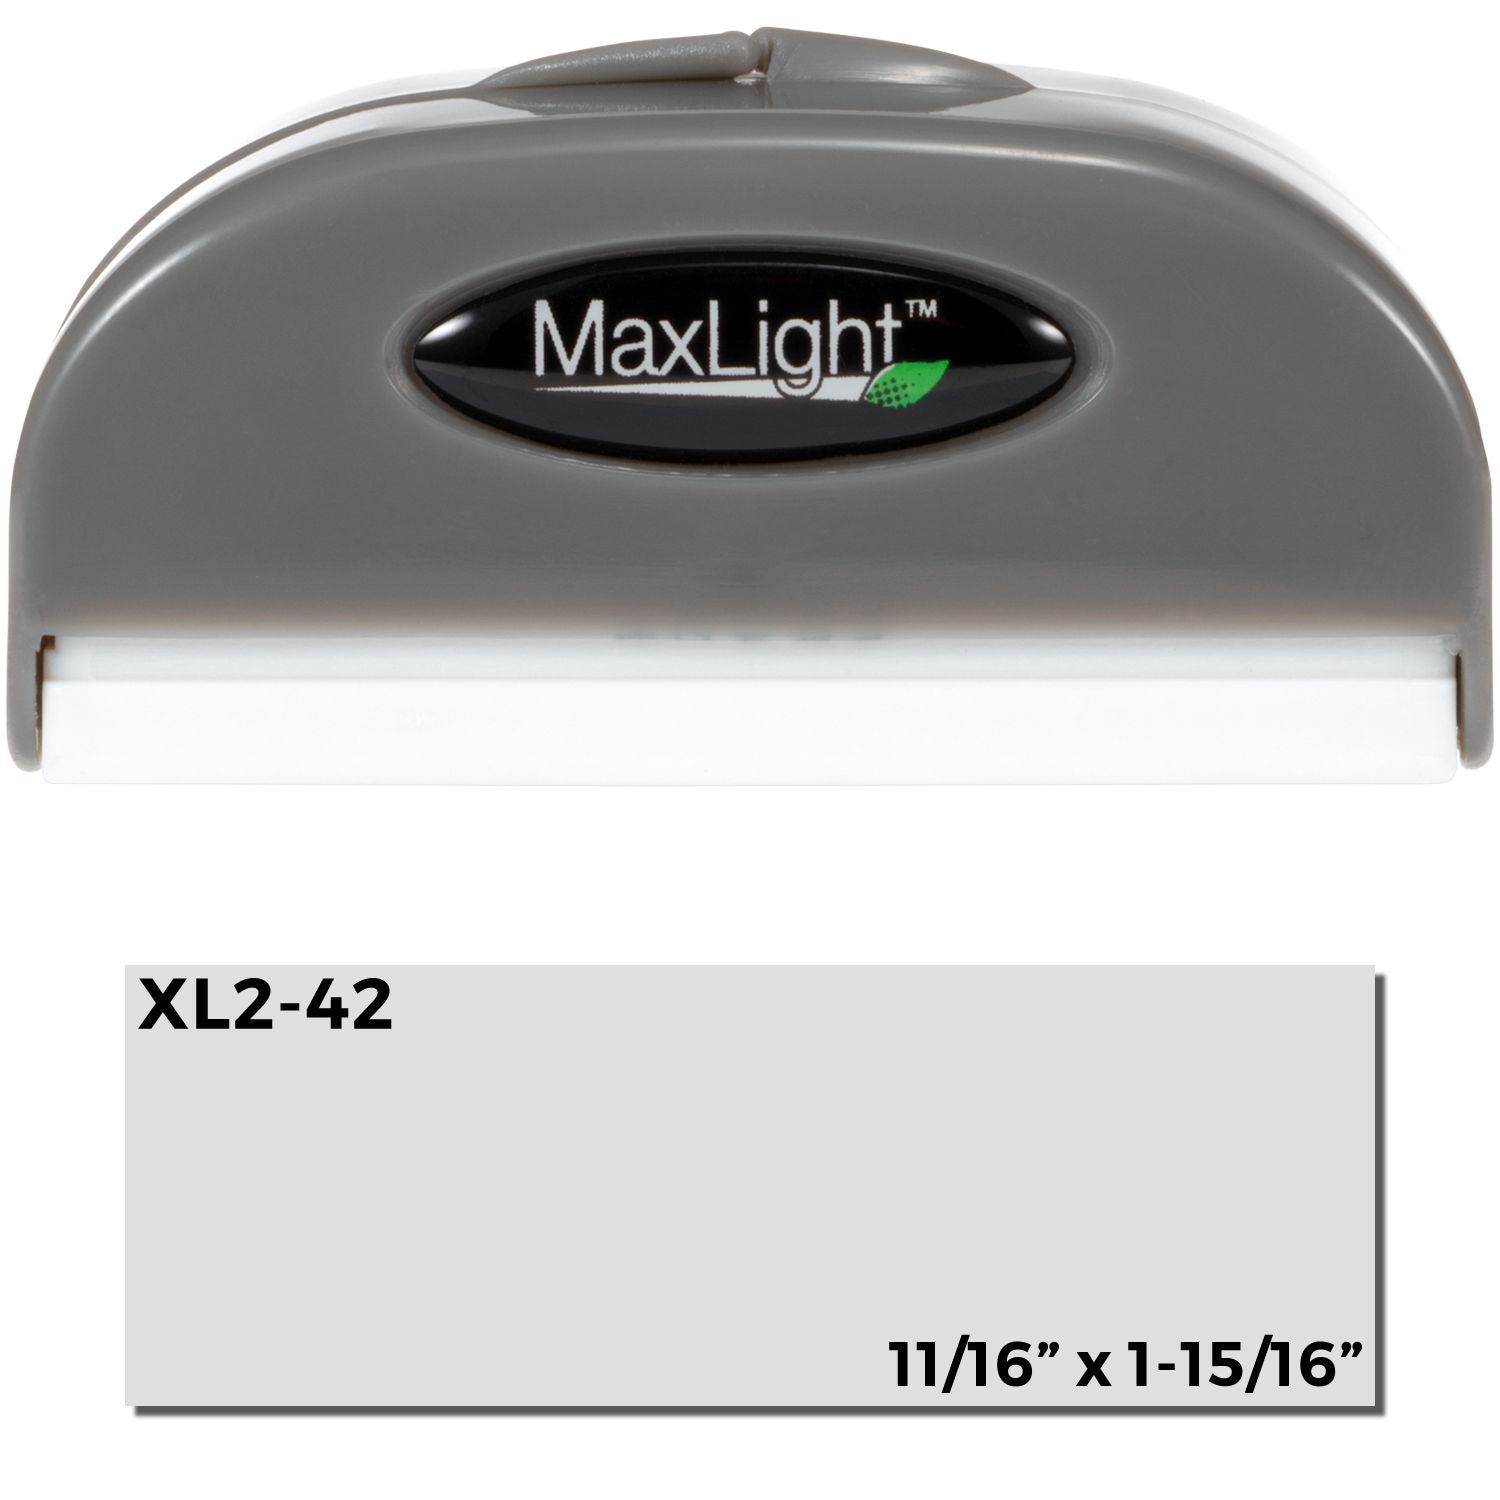 Maxlight Xl2 42 Pre Inked Stamp 11 16 X 1 15 16 Main Image